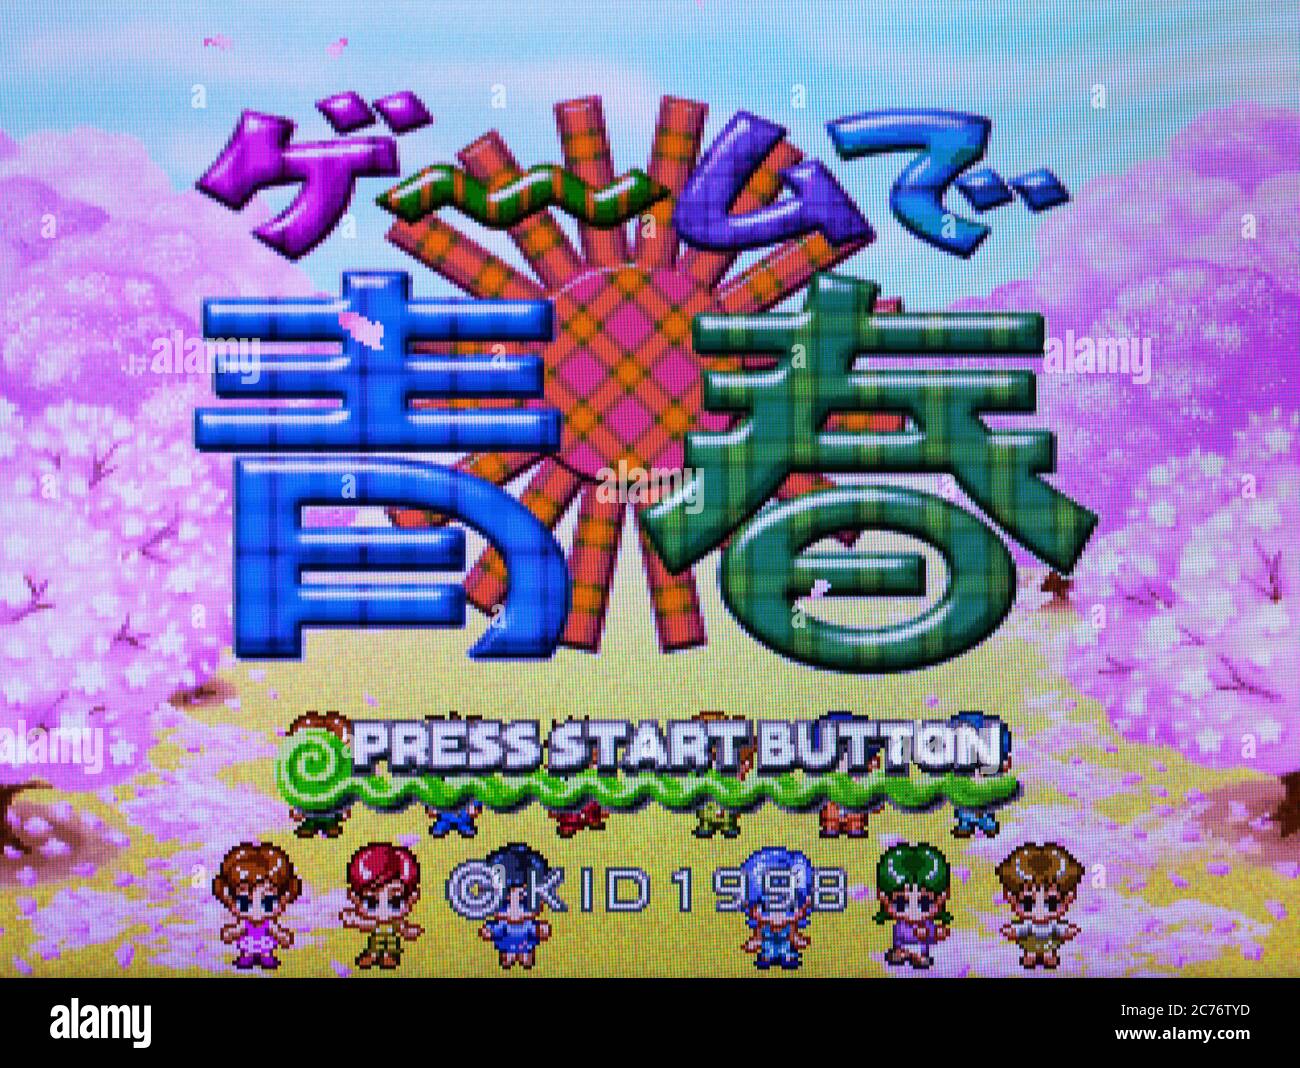 Game de Seishun - Sega Saturn Videogame - Editorial use only Stock Photo